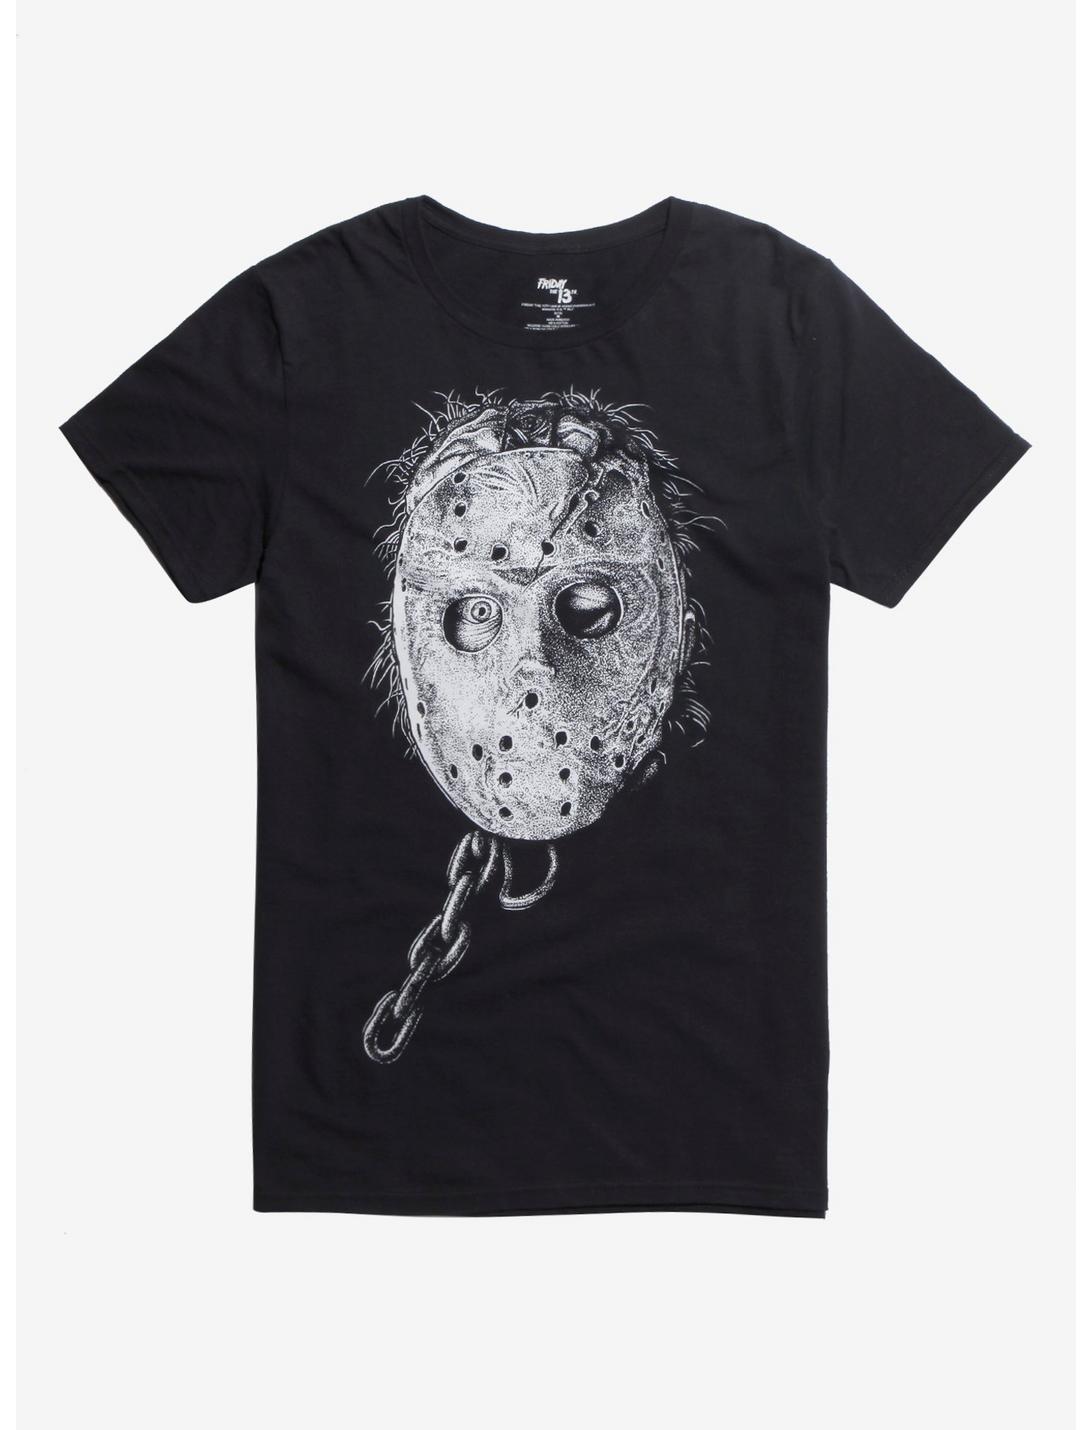 Friday The 13th Jason Portrait T-Shirt Hot Topic Exclusive, BLACK, hi-res